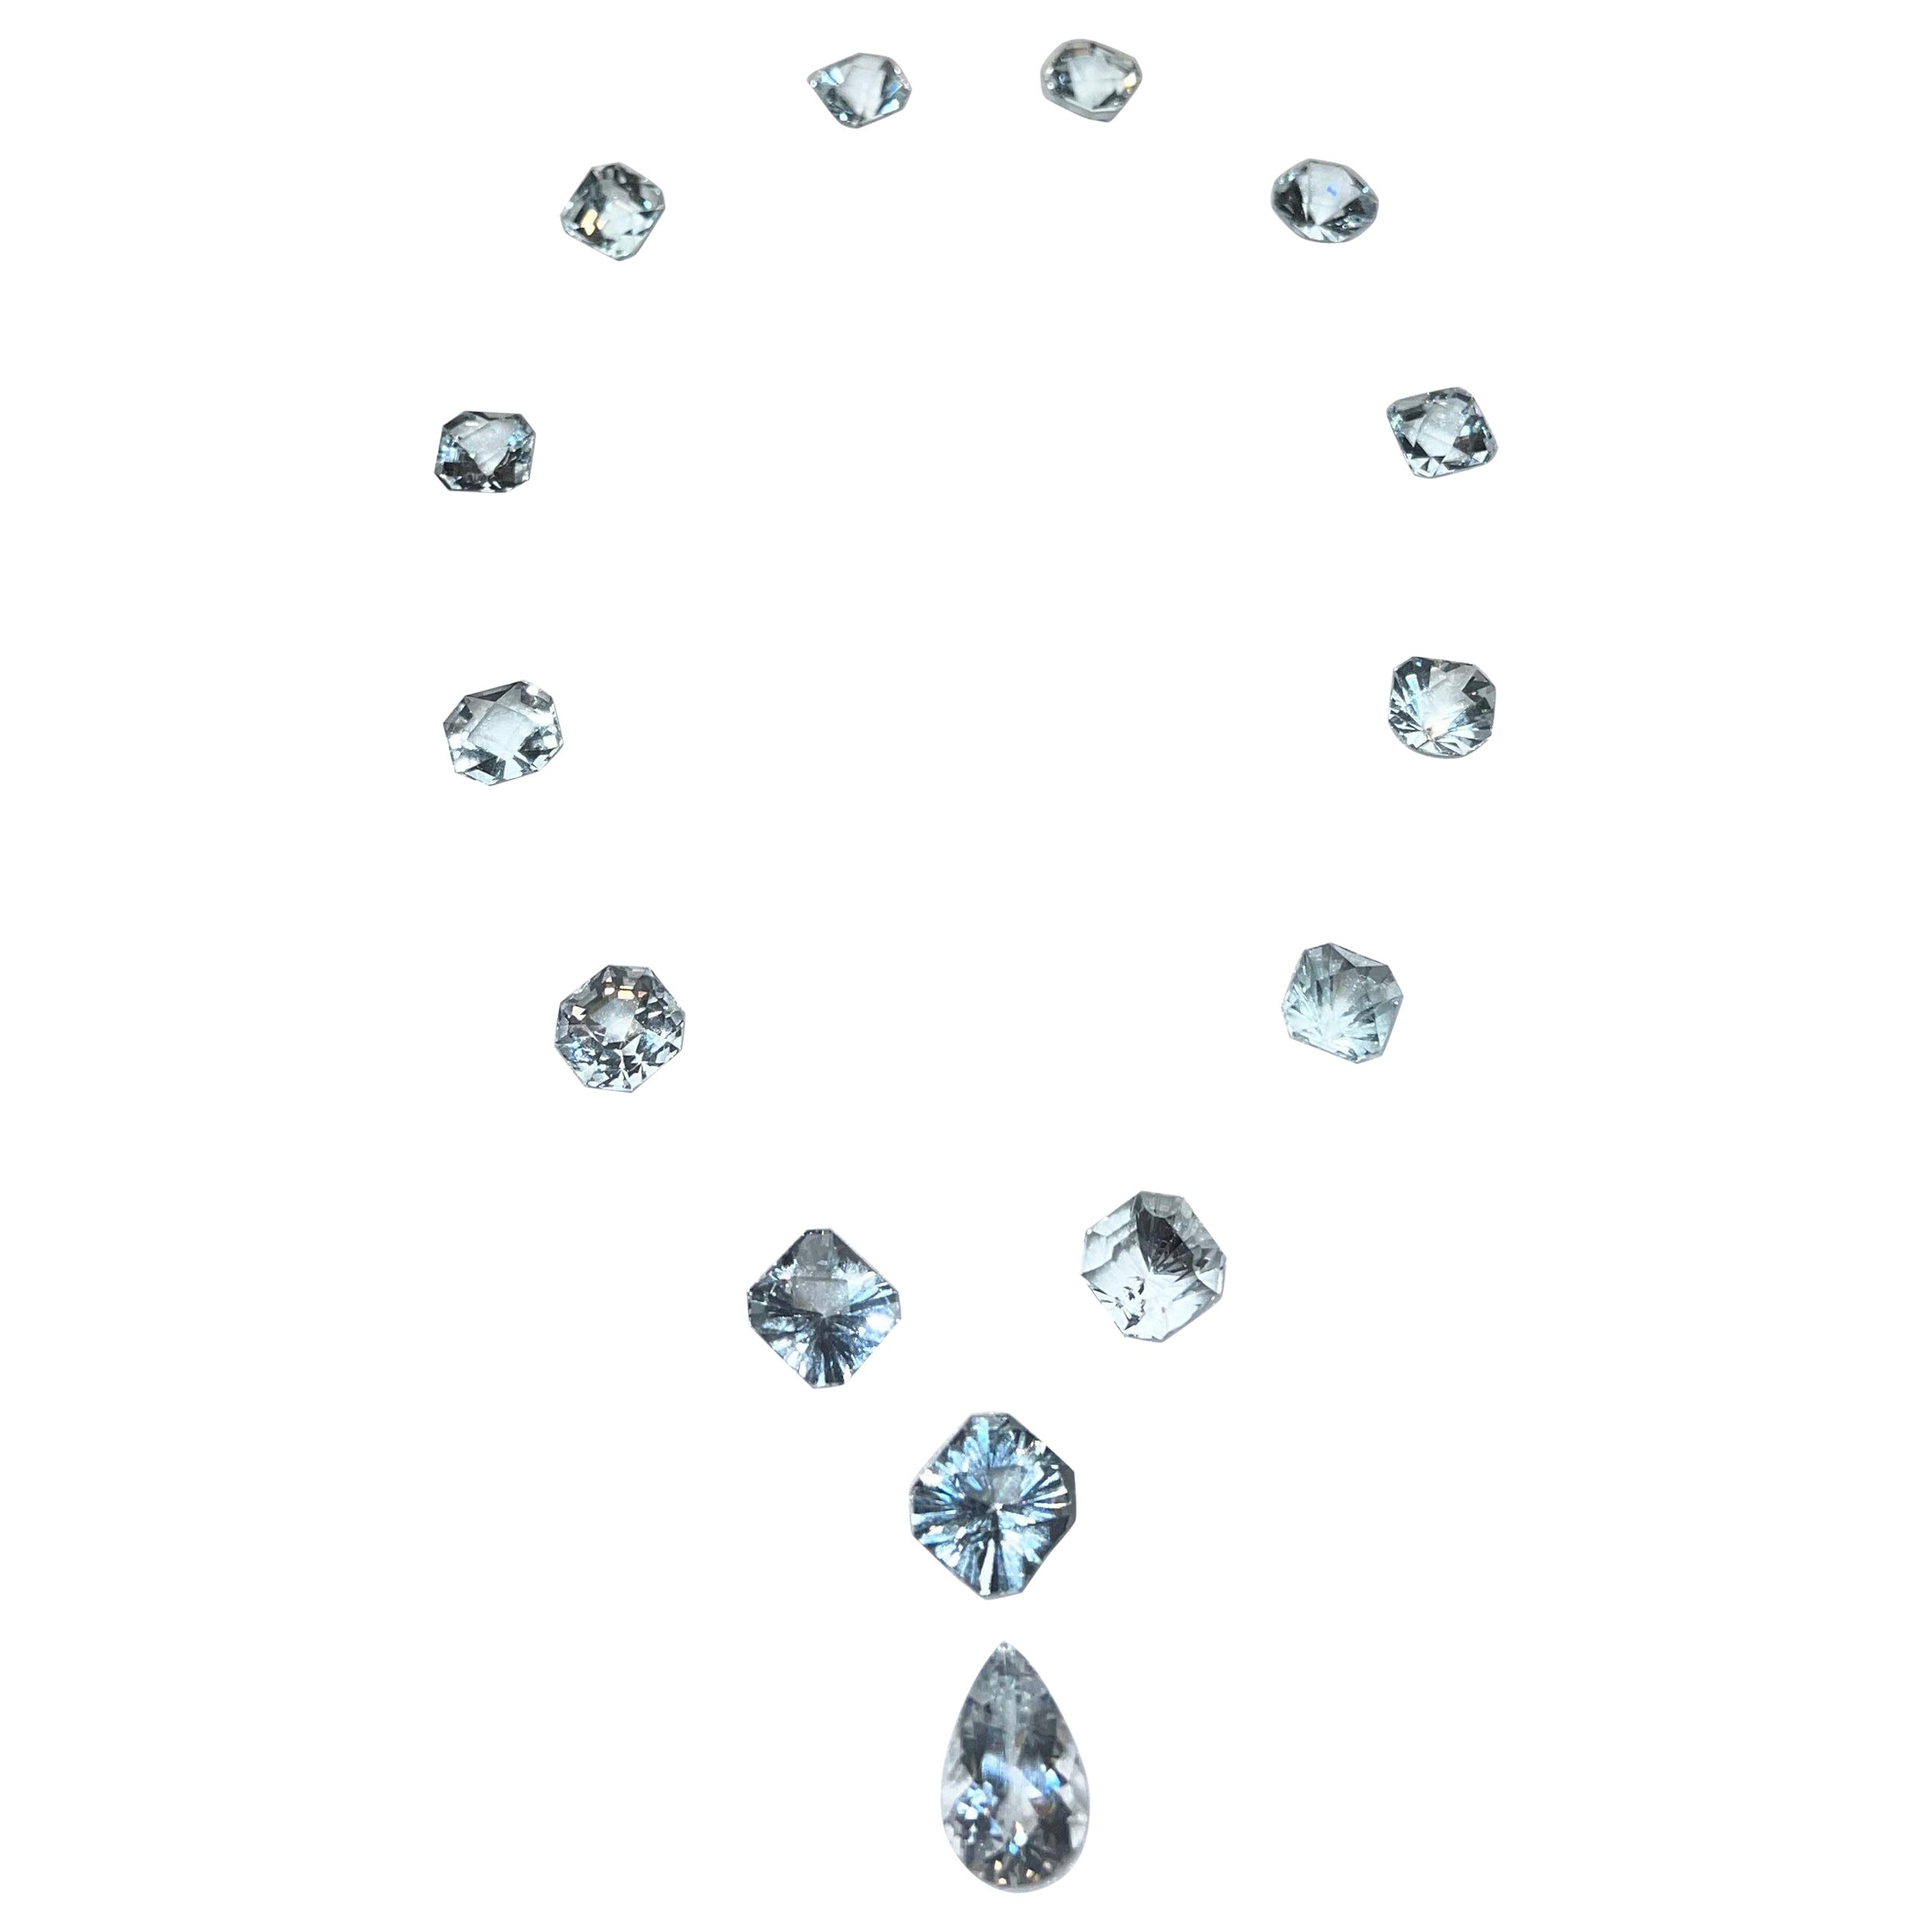 140 Carat Light Ice Blue Beryl Aquamarine Gemstone Suite for Making a Necklace